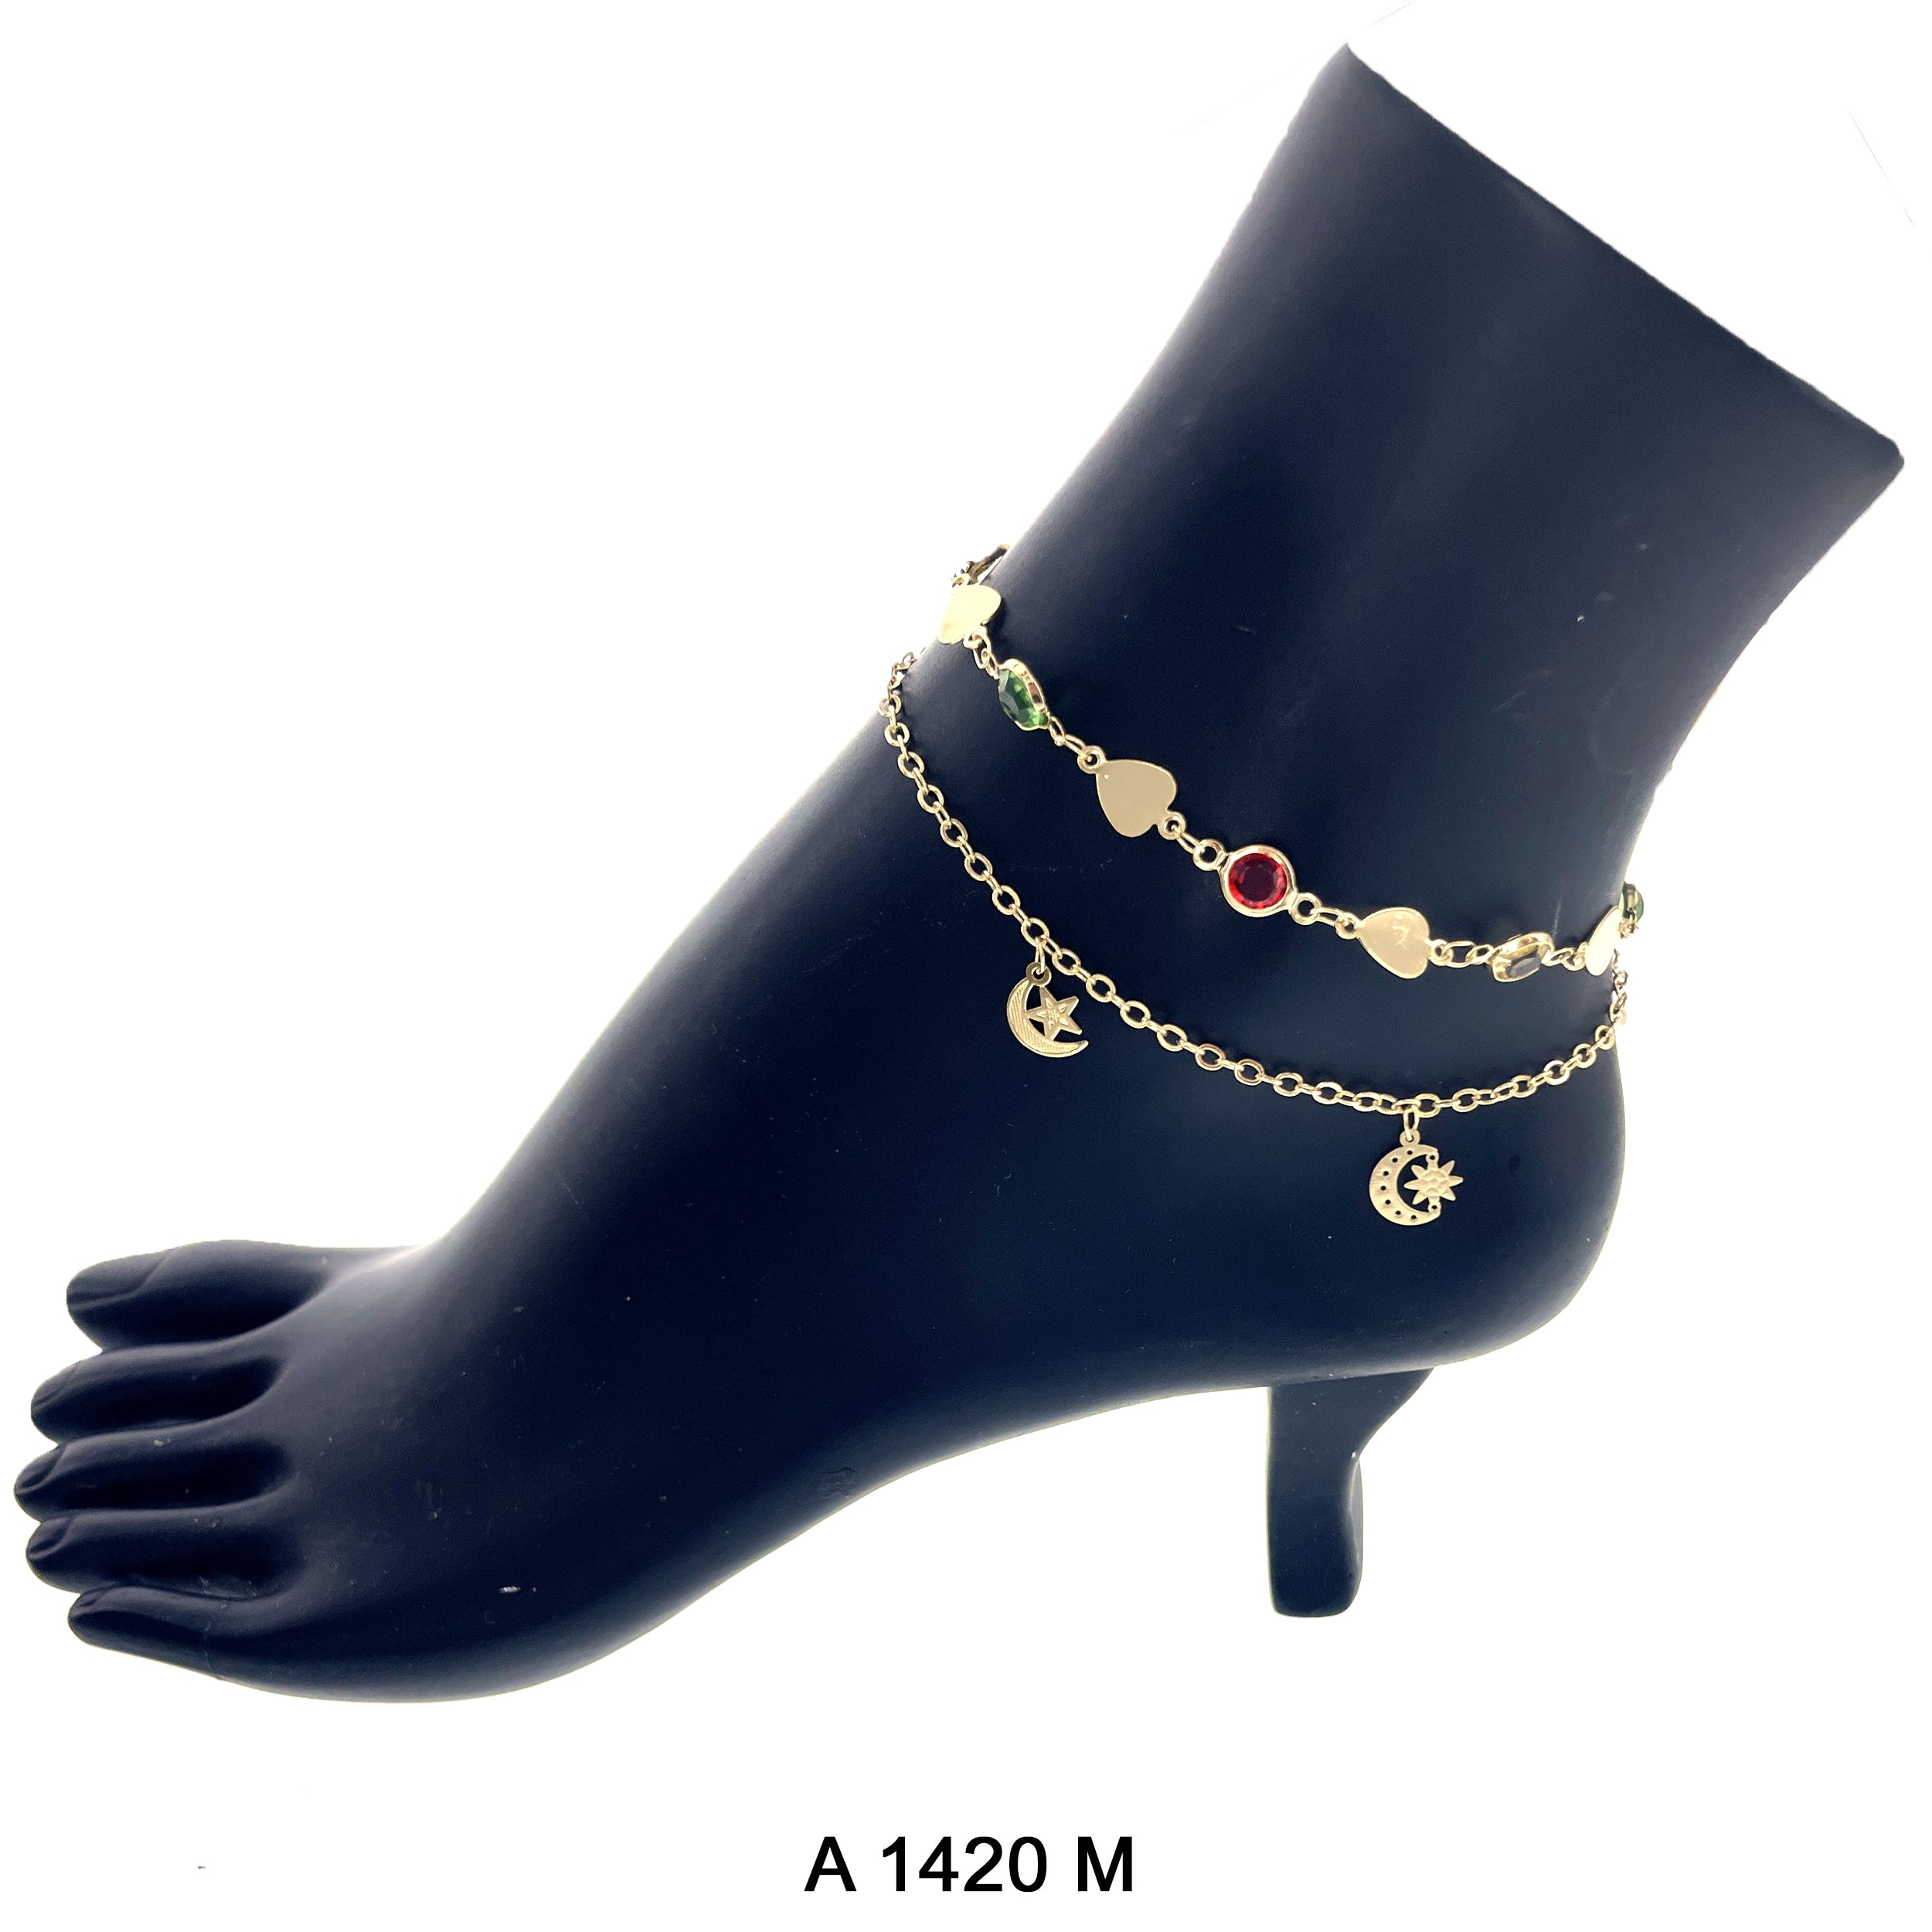 Fashion Anklets A 1420 M